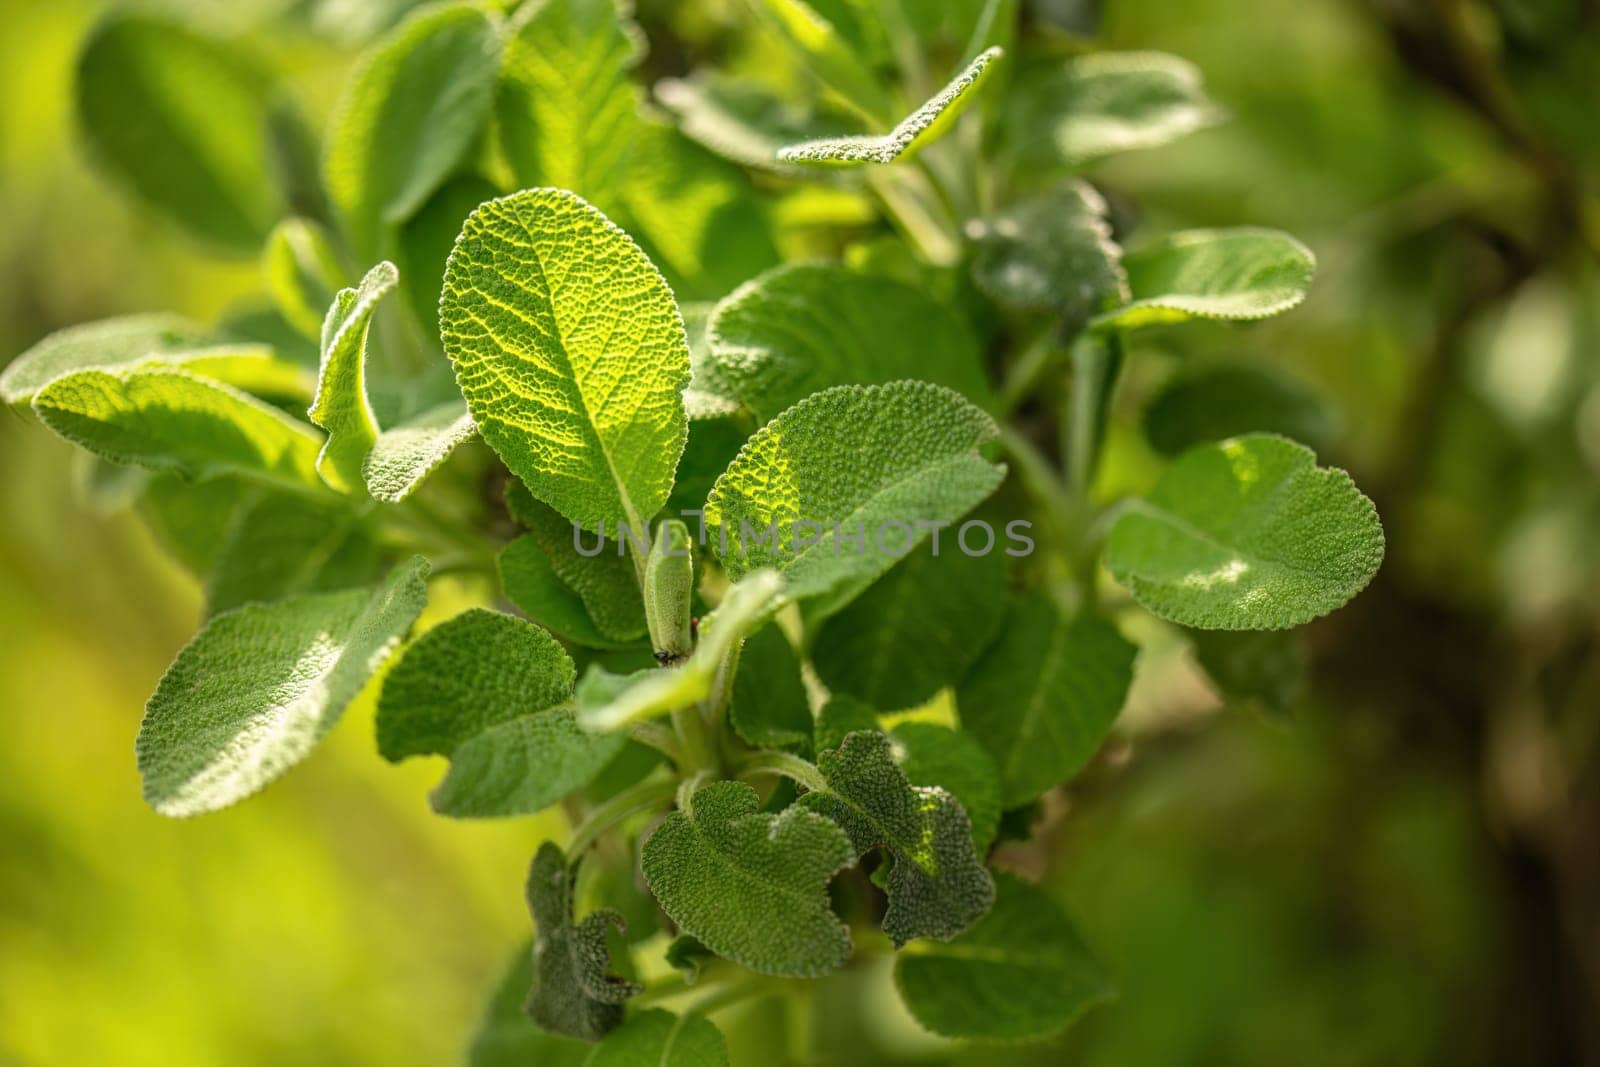 Sage Herb Leaf Detail by pippocarlot